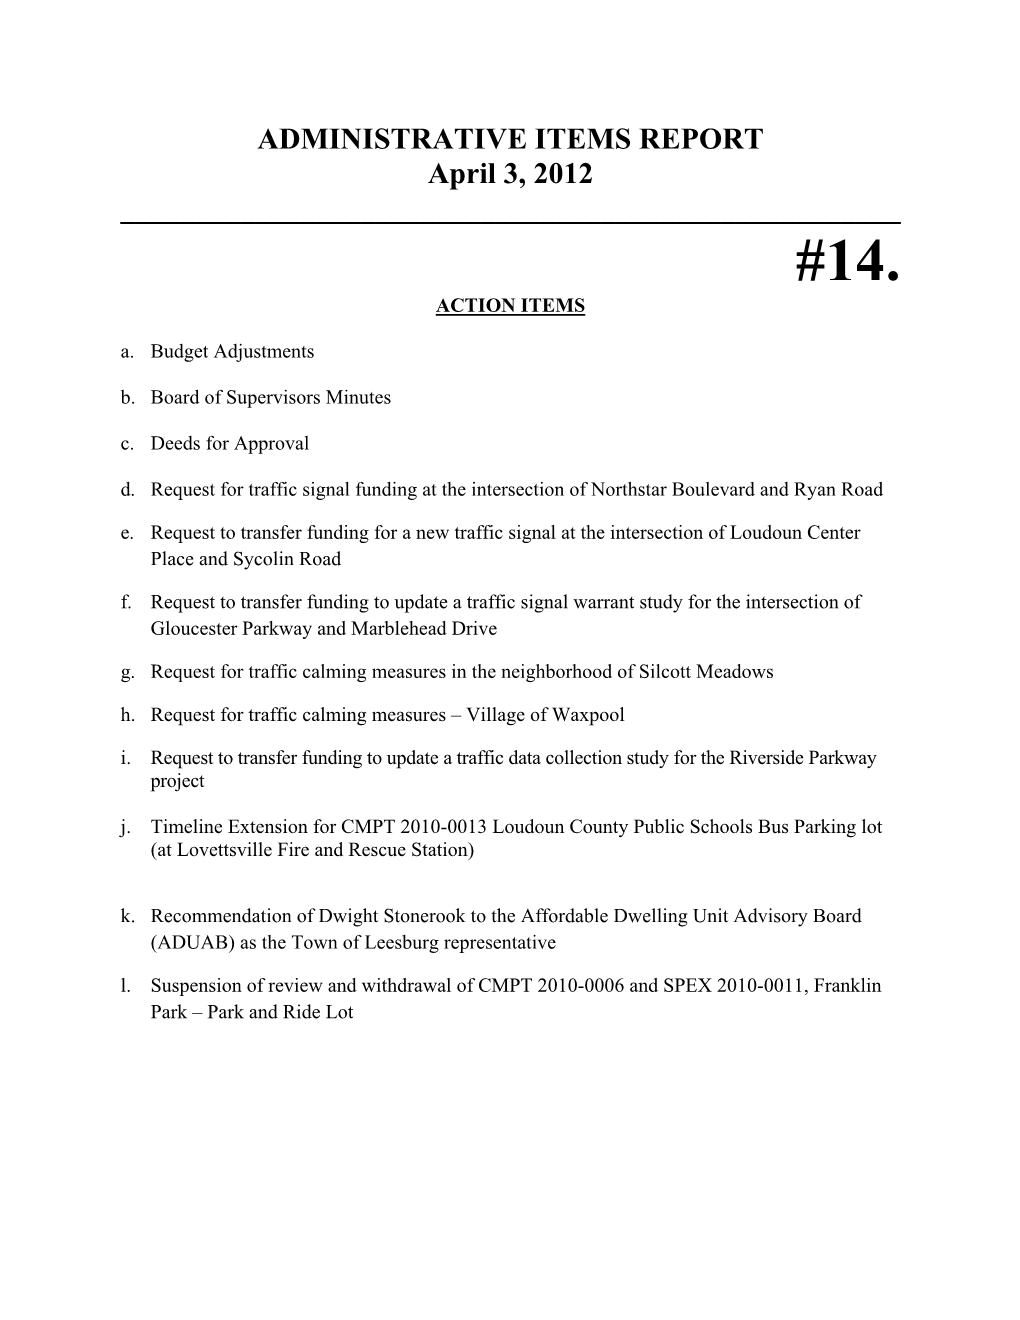 ADMINISTRATIVE ITEMS REPORT April 3, 2012 ______#14